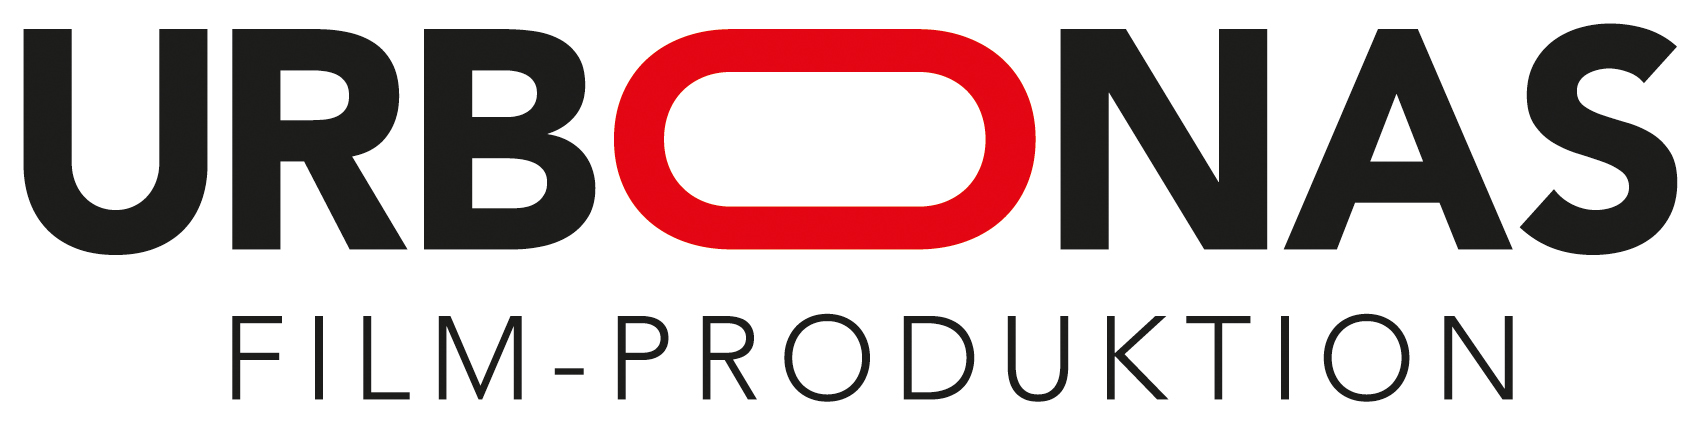 Filmproduktion Urbonas GbR Logo